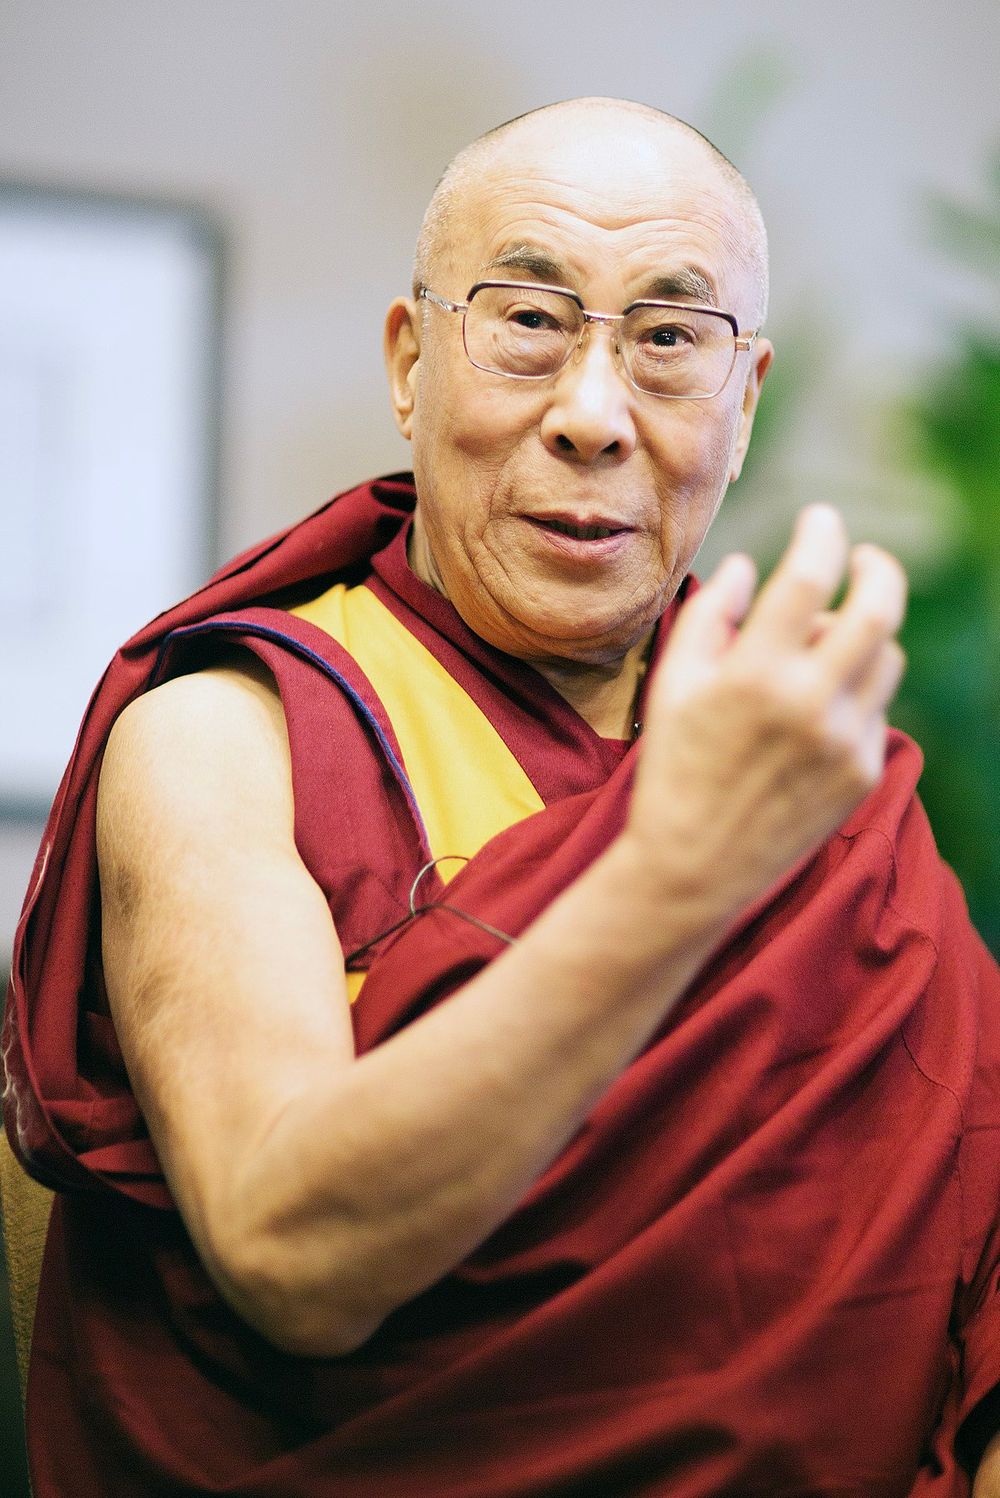 The Dalai Lama Believes in Peace